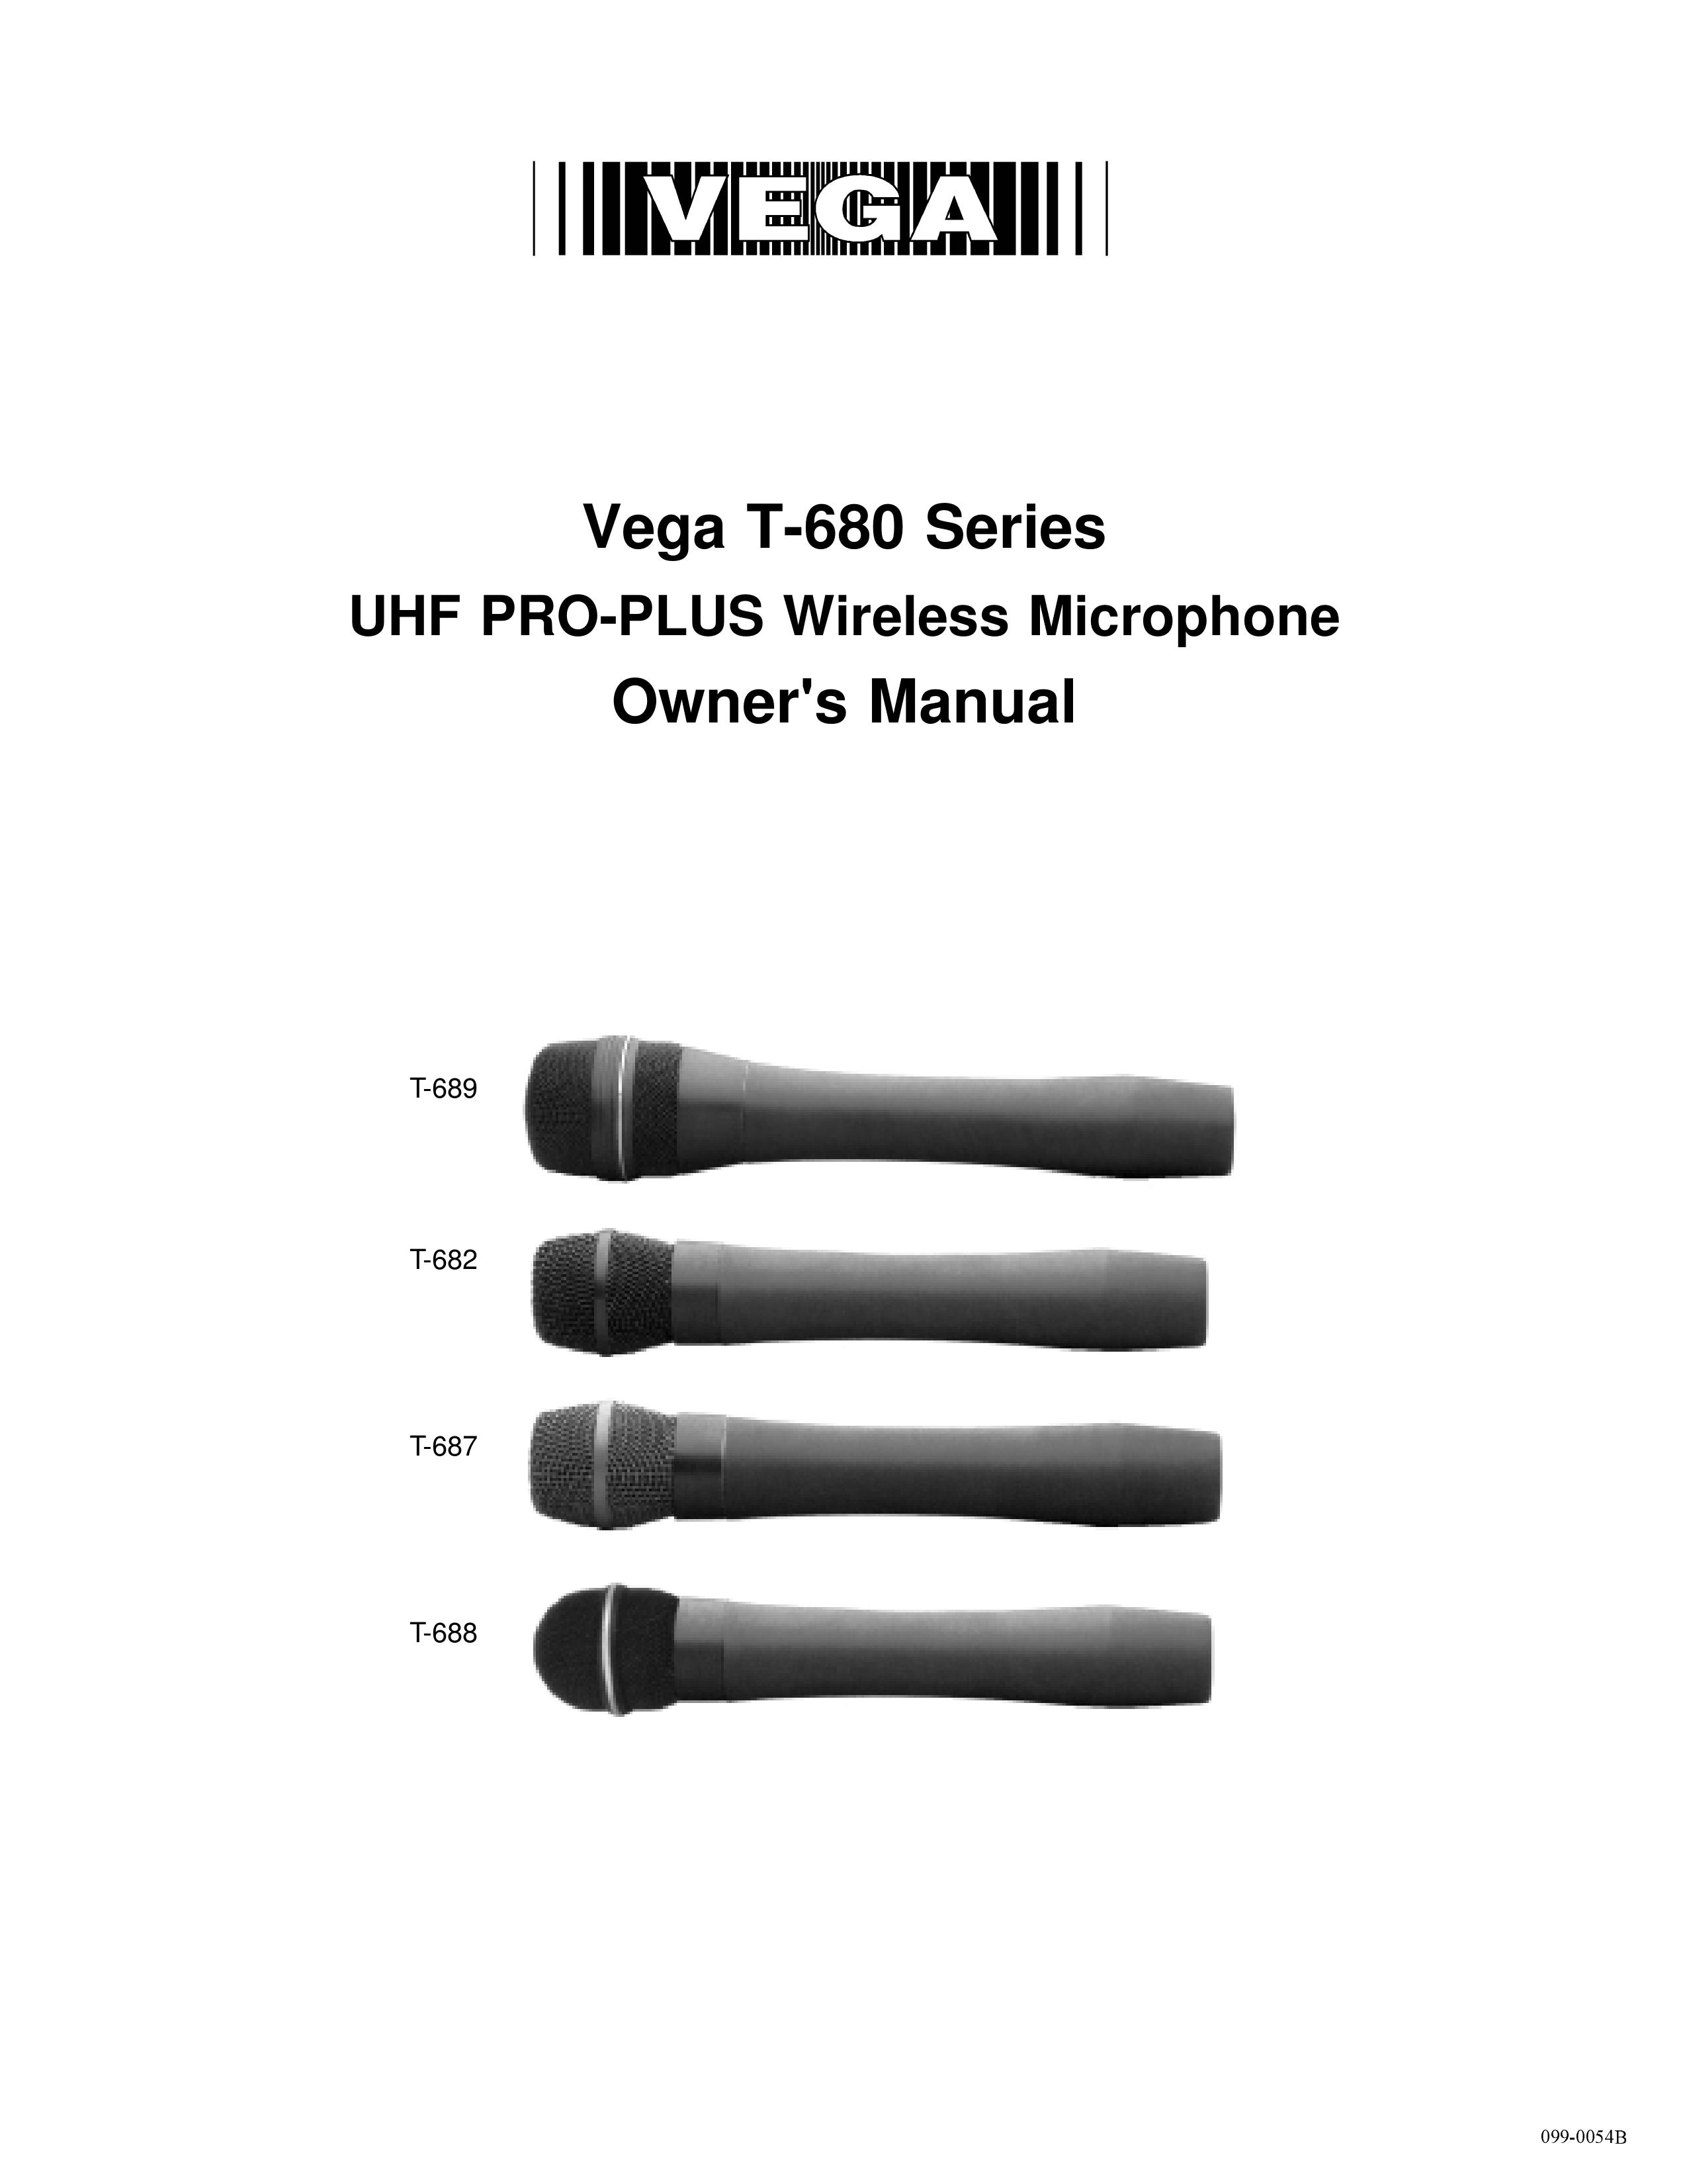 Cerwin-Vega UHF pro-plus wireless microphone Microphone User Manual